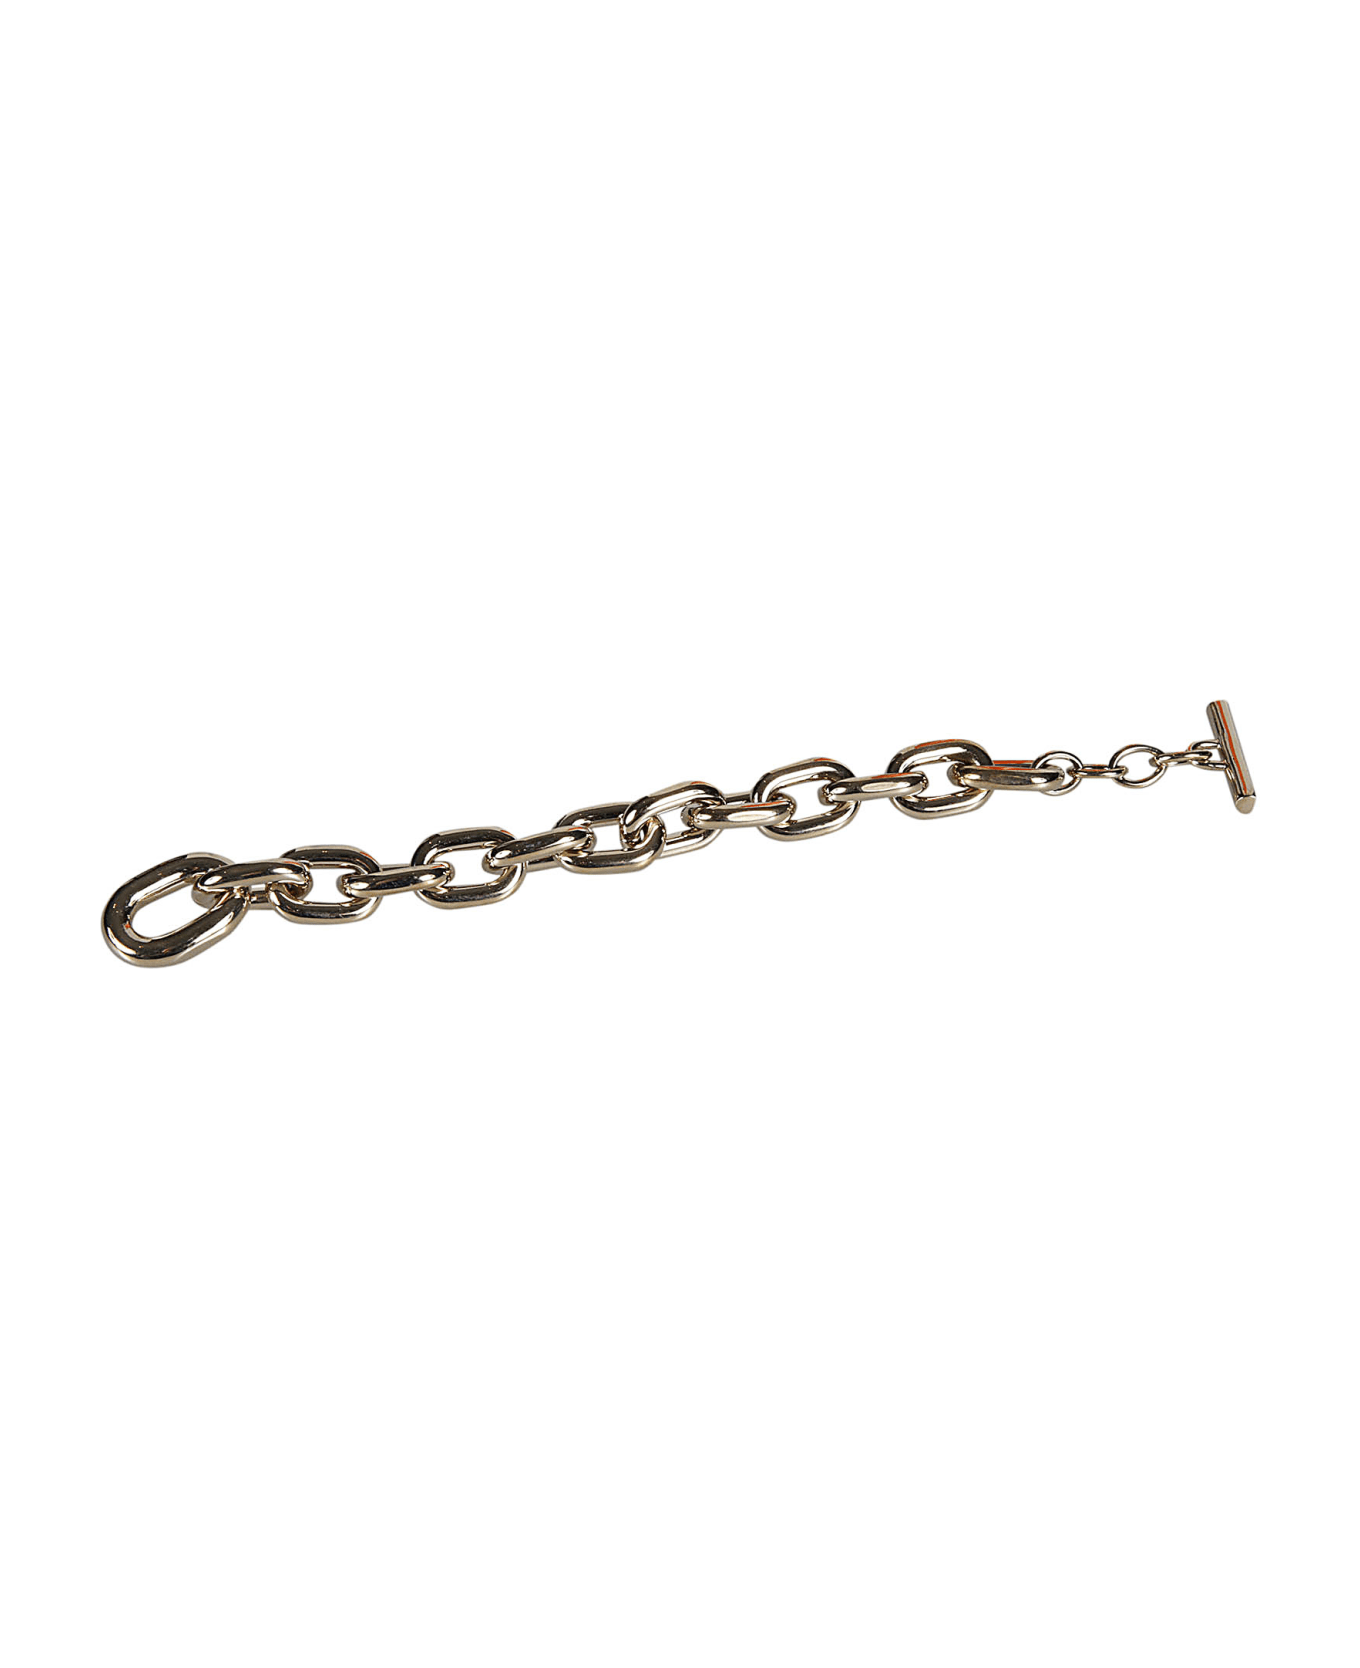 Paco Rabanne Chain Bracelet - Gold